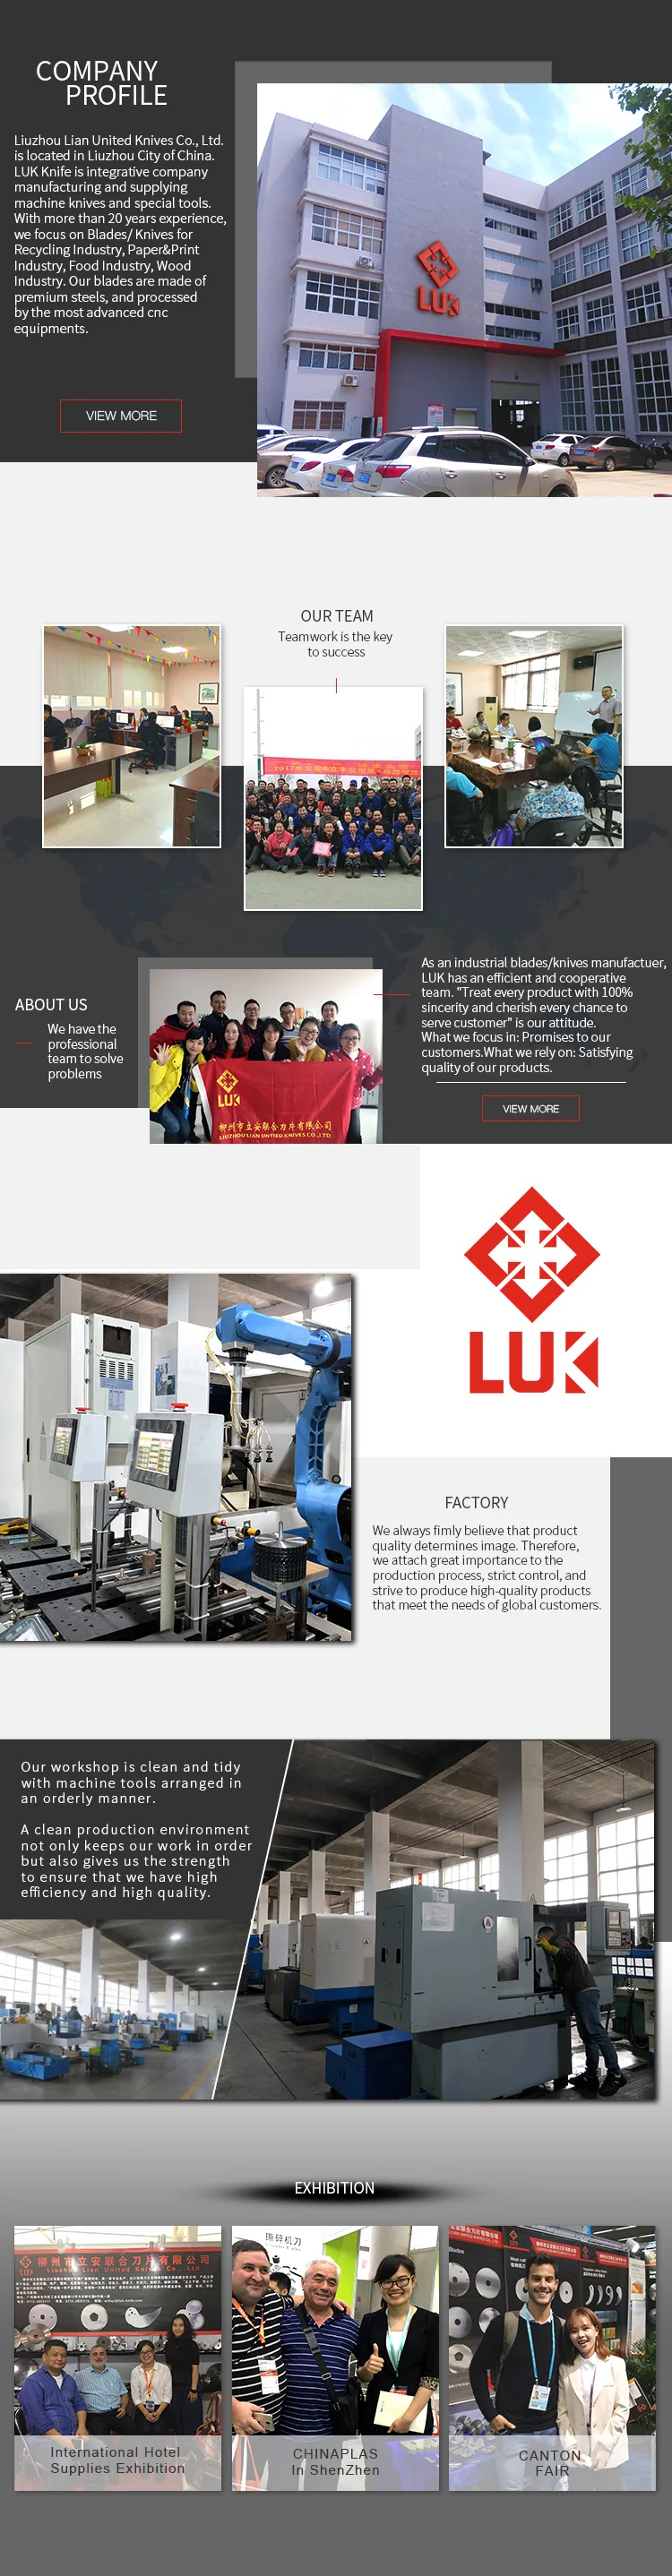 luk Company Information.jpg